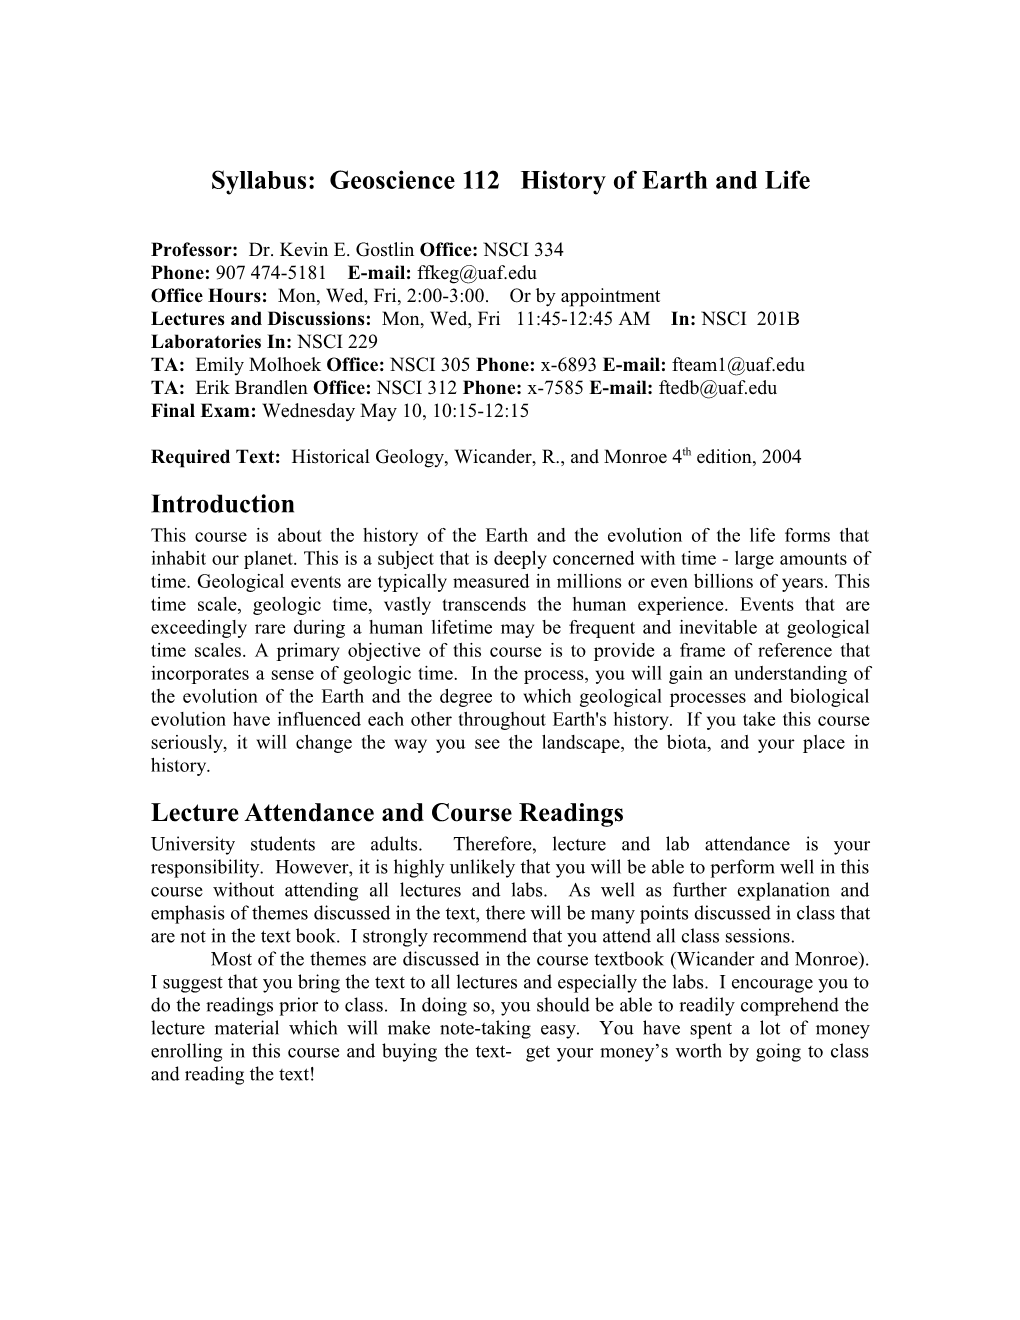 Syllabus: Geoscience 315W Paleobiology & Paleontology Professor: Sarah J